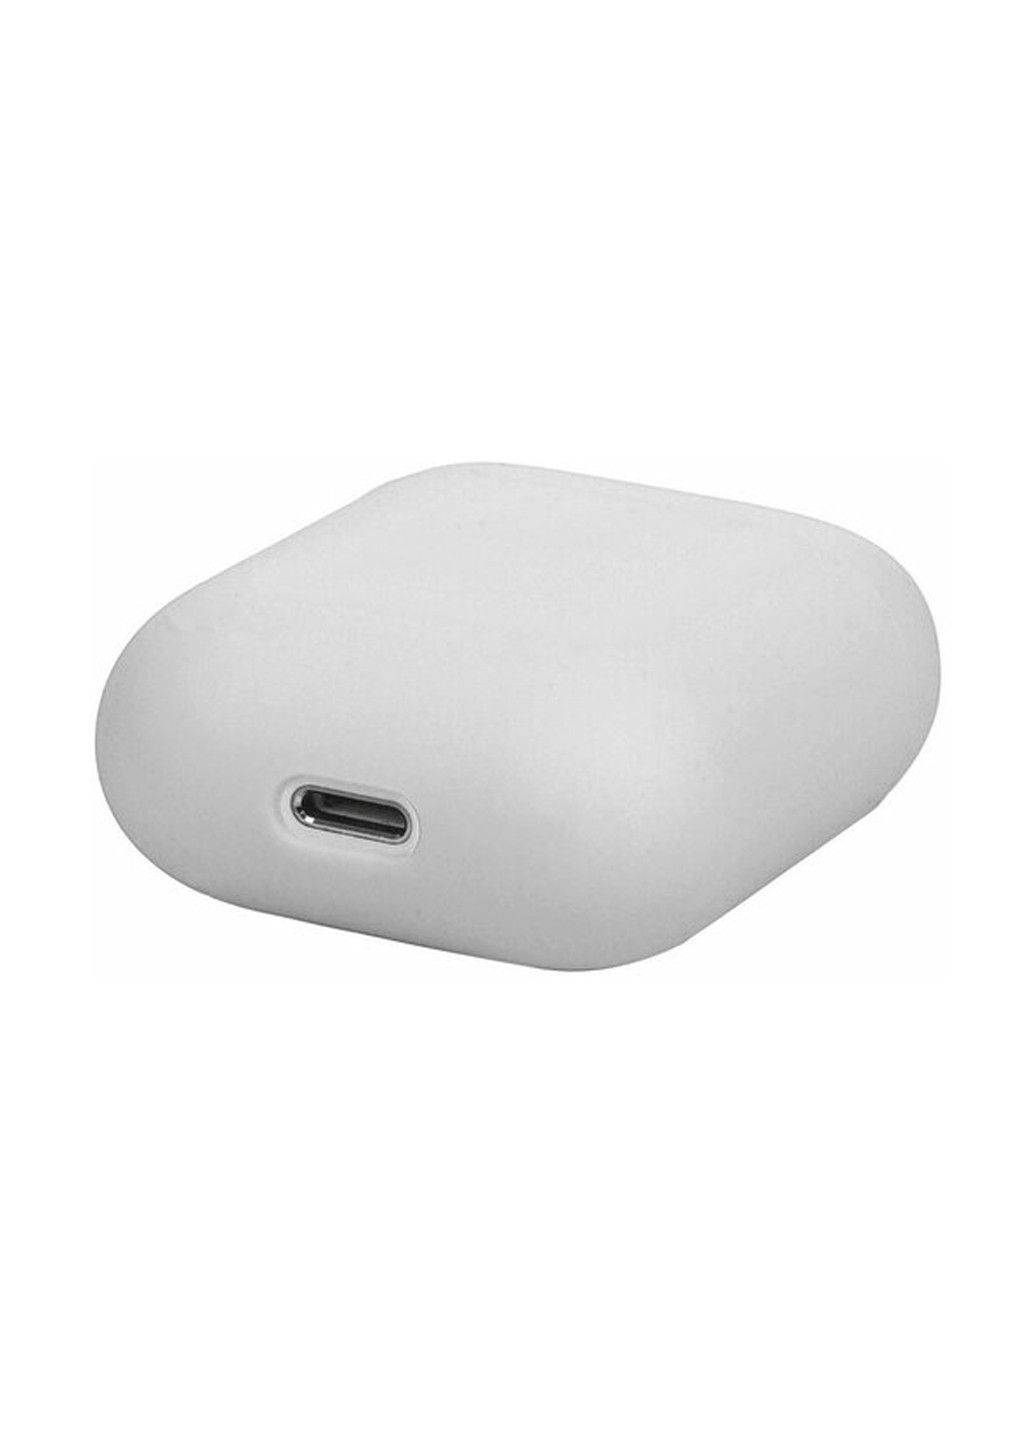 Чехол Silicon для Apple AirPods White (703352) BeCover silicon для apple airpods white (703352) (144451902)